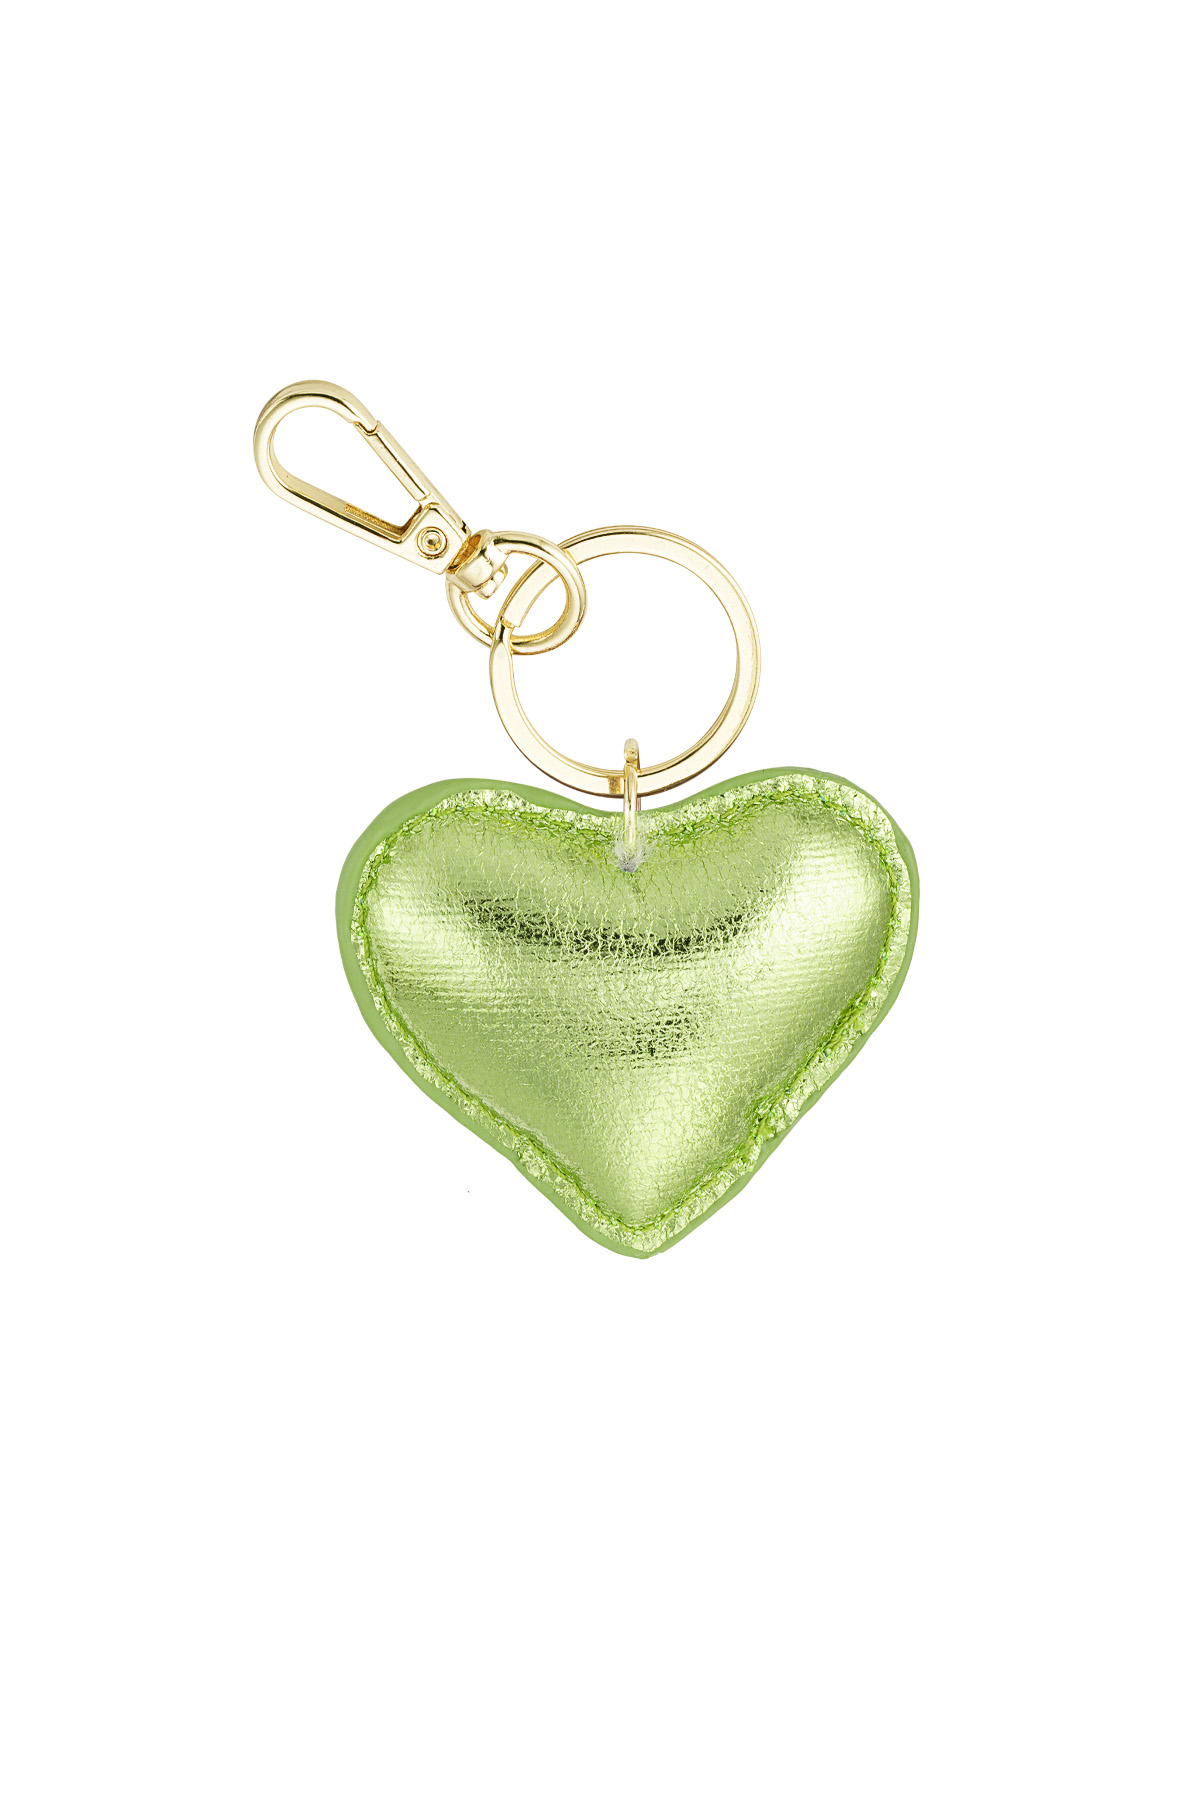 Keychain heart - apple green